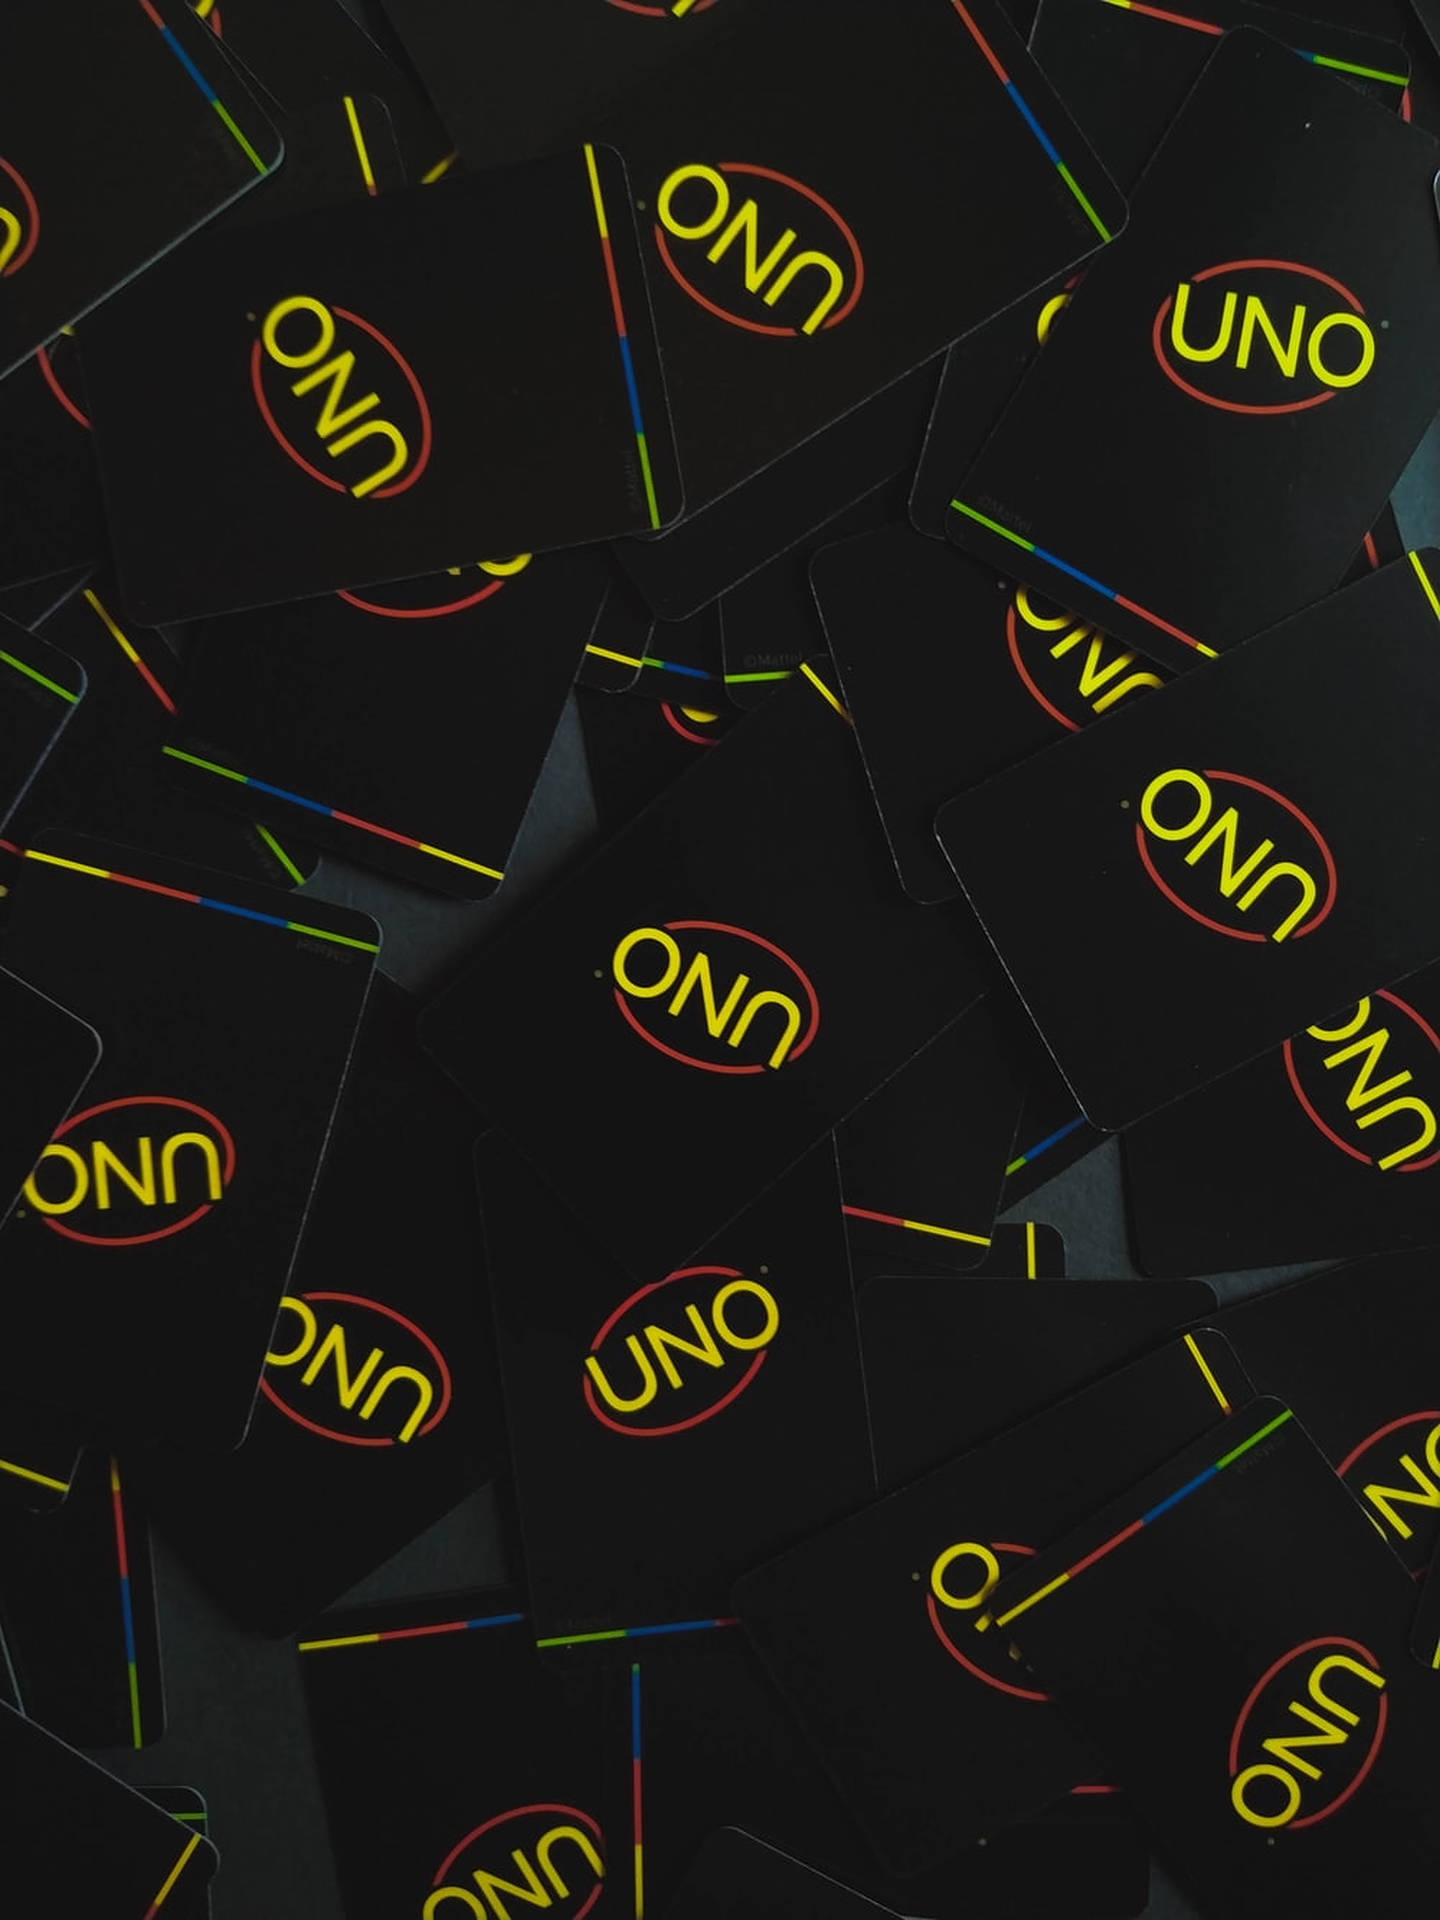 A Minimalist Design Of An Uno Card Deck Background